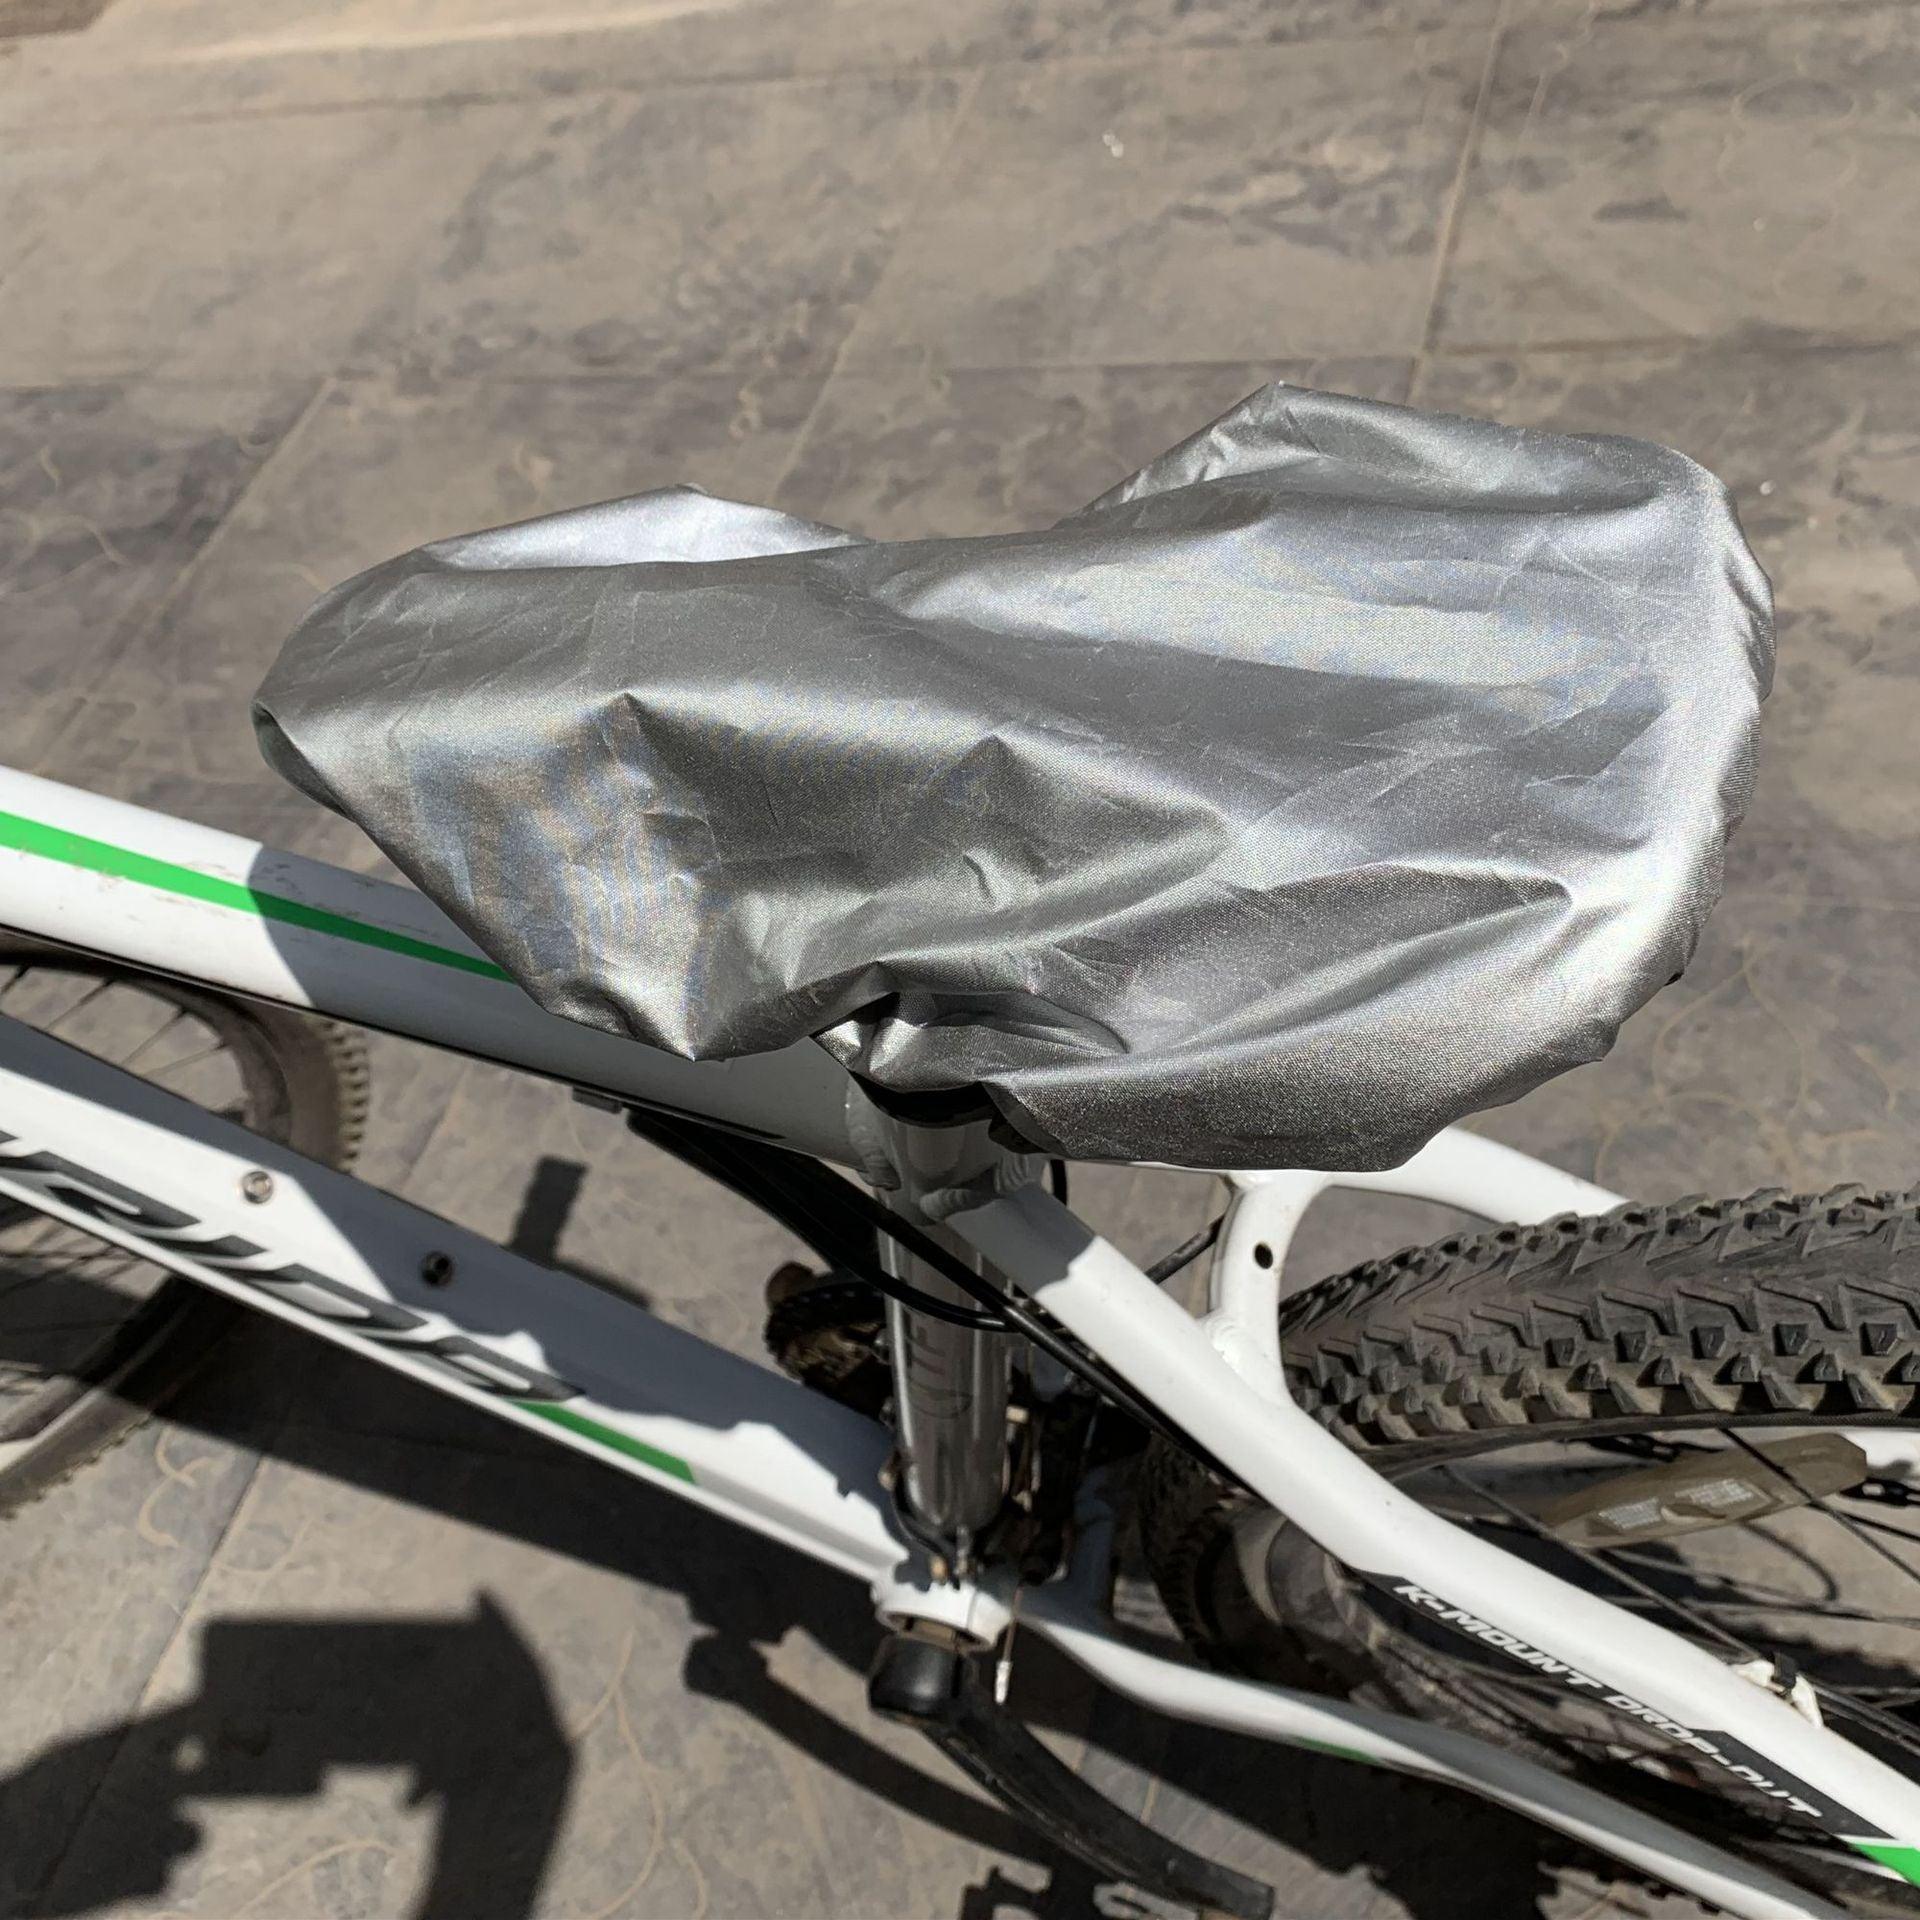 Bicycle Outdoor Seat Cover- Waterproof and Dustproof - dealskart.com.au